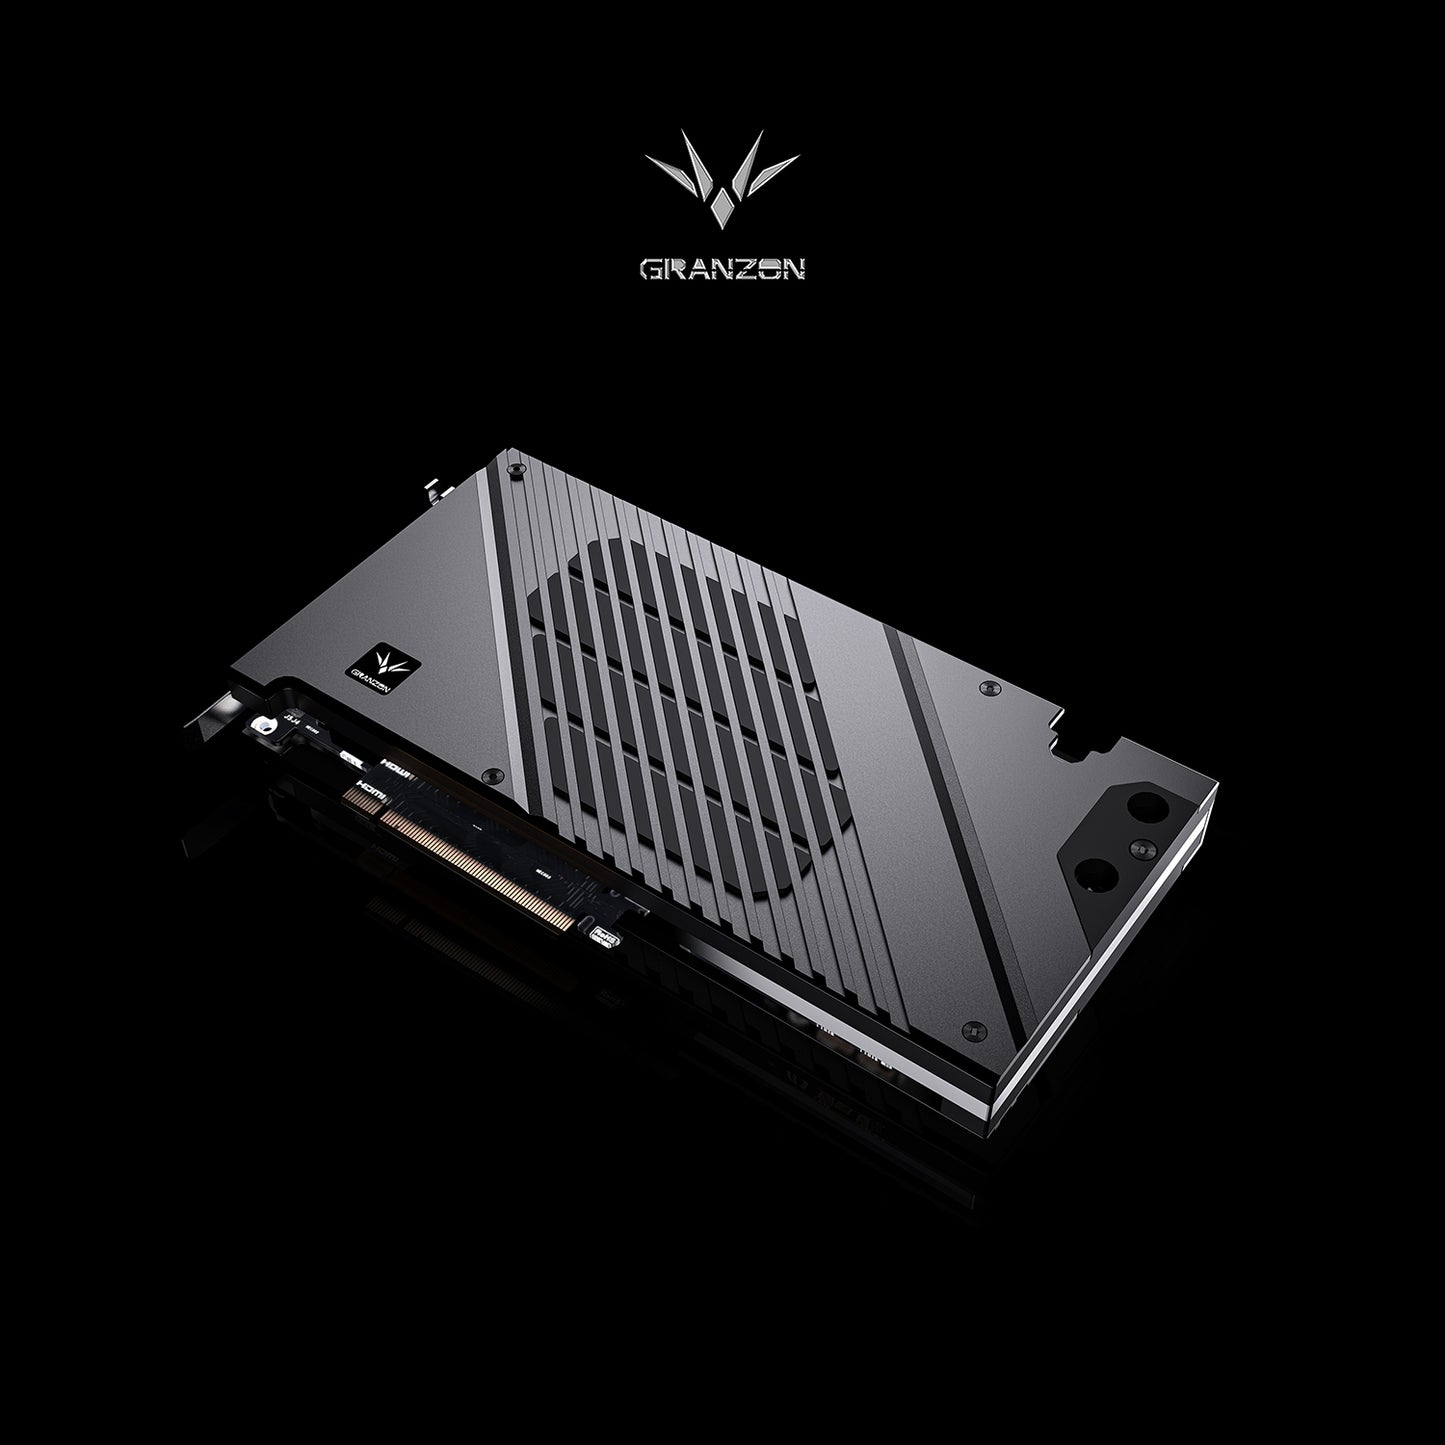 Granzon Full Armor GPU Block For Gigabyte RTX 4090 Windforce / Aorus Xtreme Windforce 24G, Bykski Premium Sub-Brand High Quality Series GPU Water Cooling Cooler, GBN-IG4080VXOC